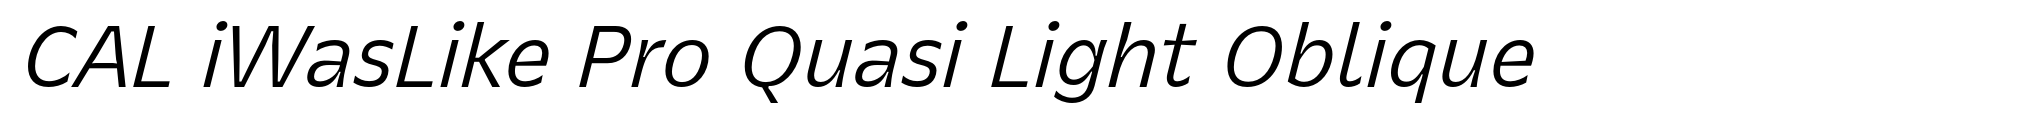 CAL iWasLike Pro Quasi Light Oblique image